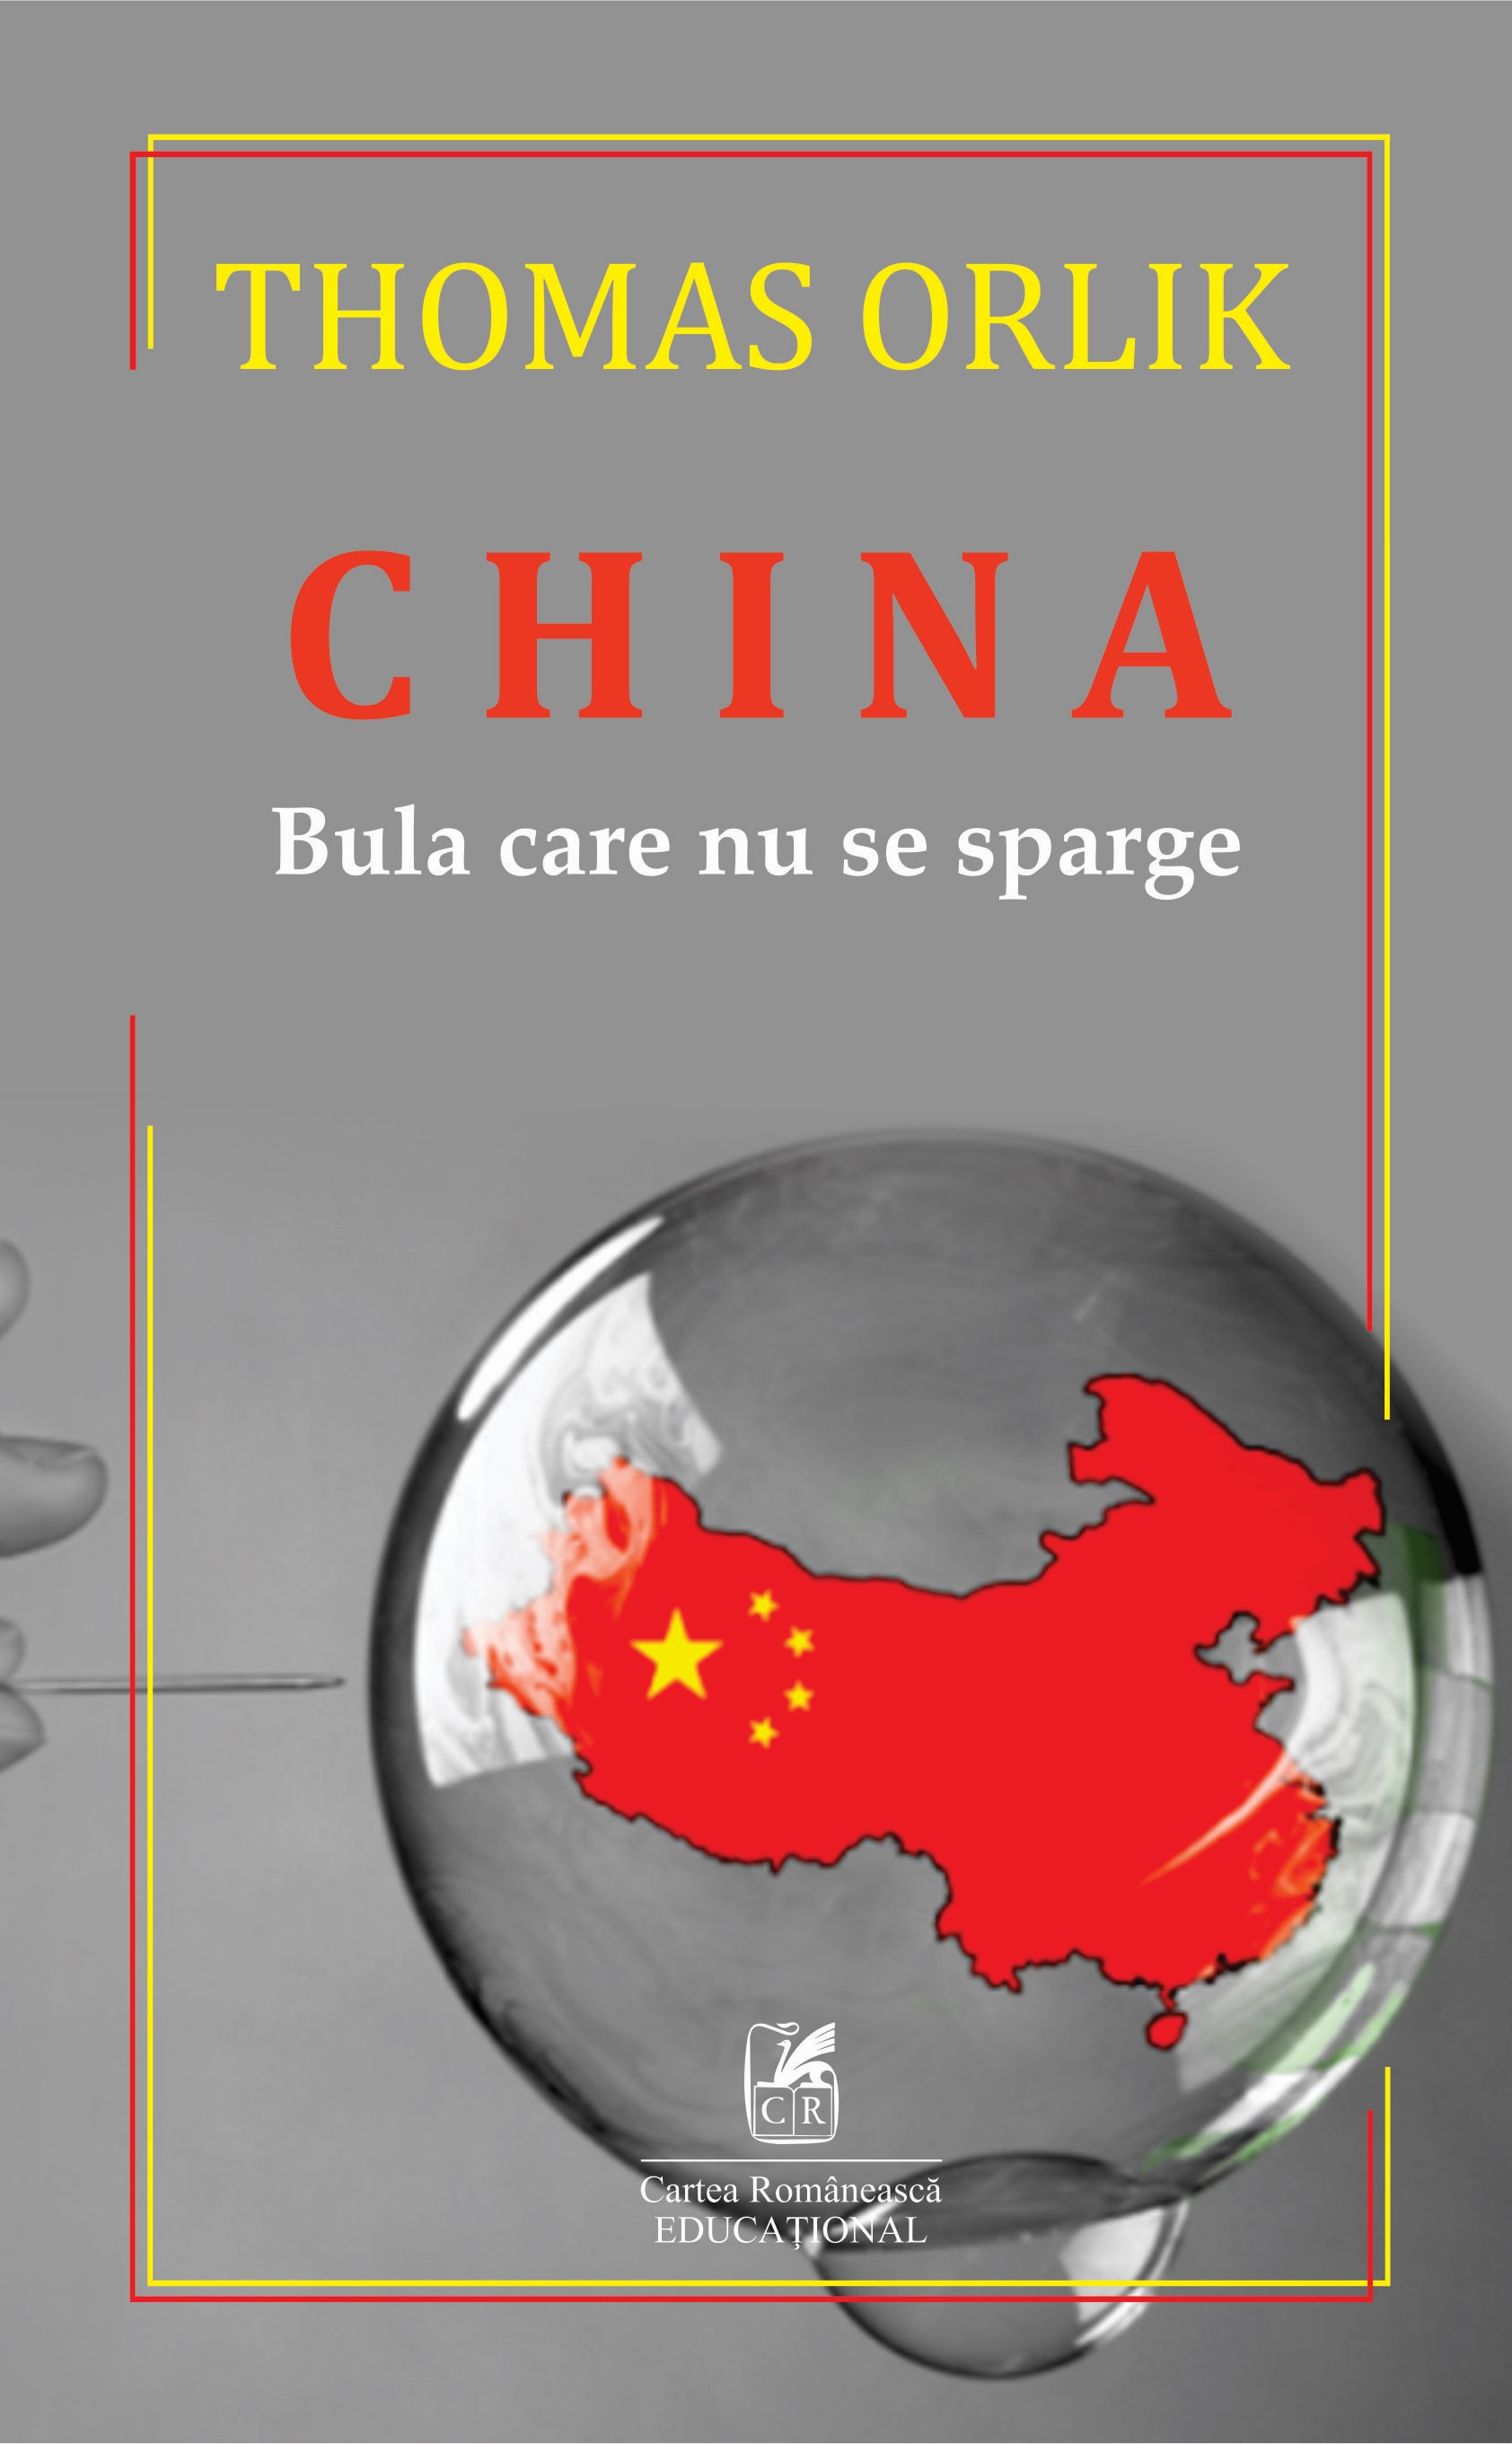 China | Thomas Orlik Cartea Romaneasca educational imagine 2022